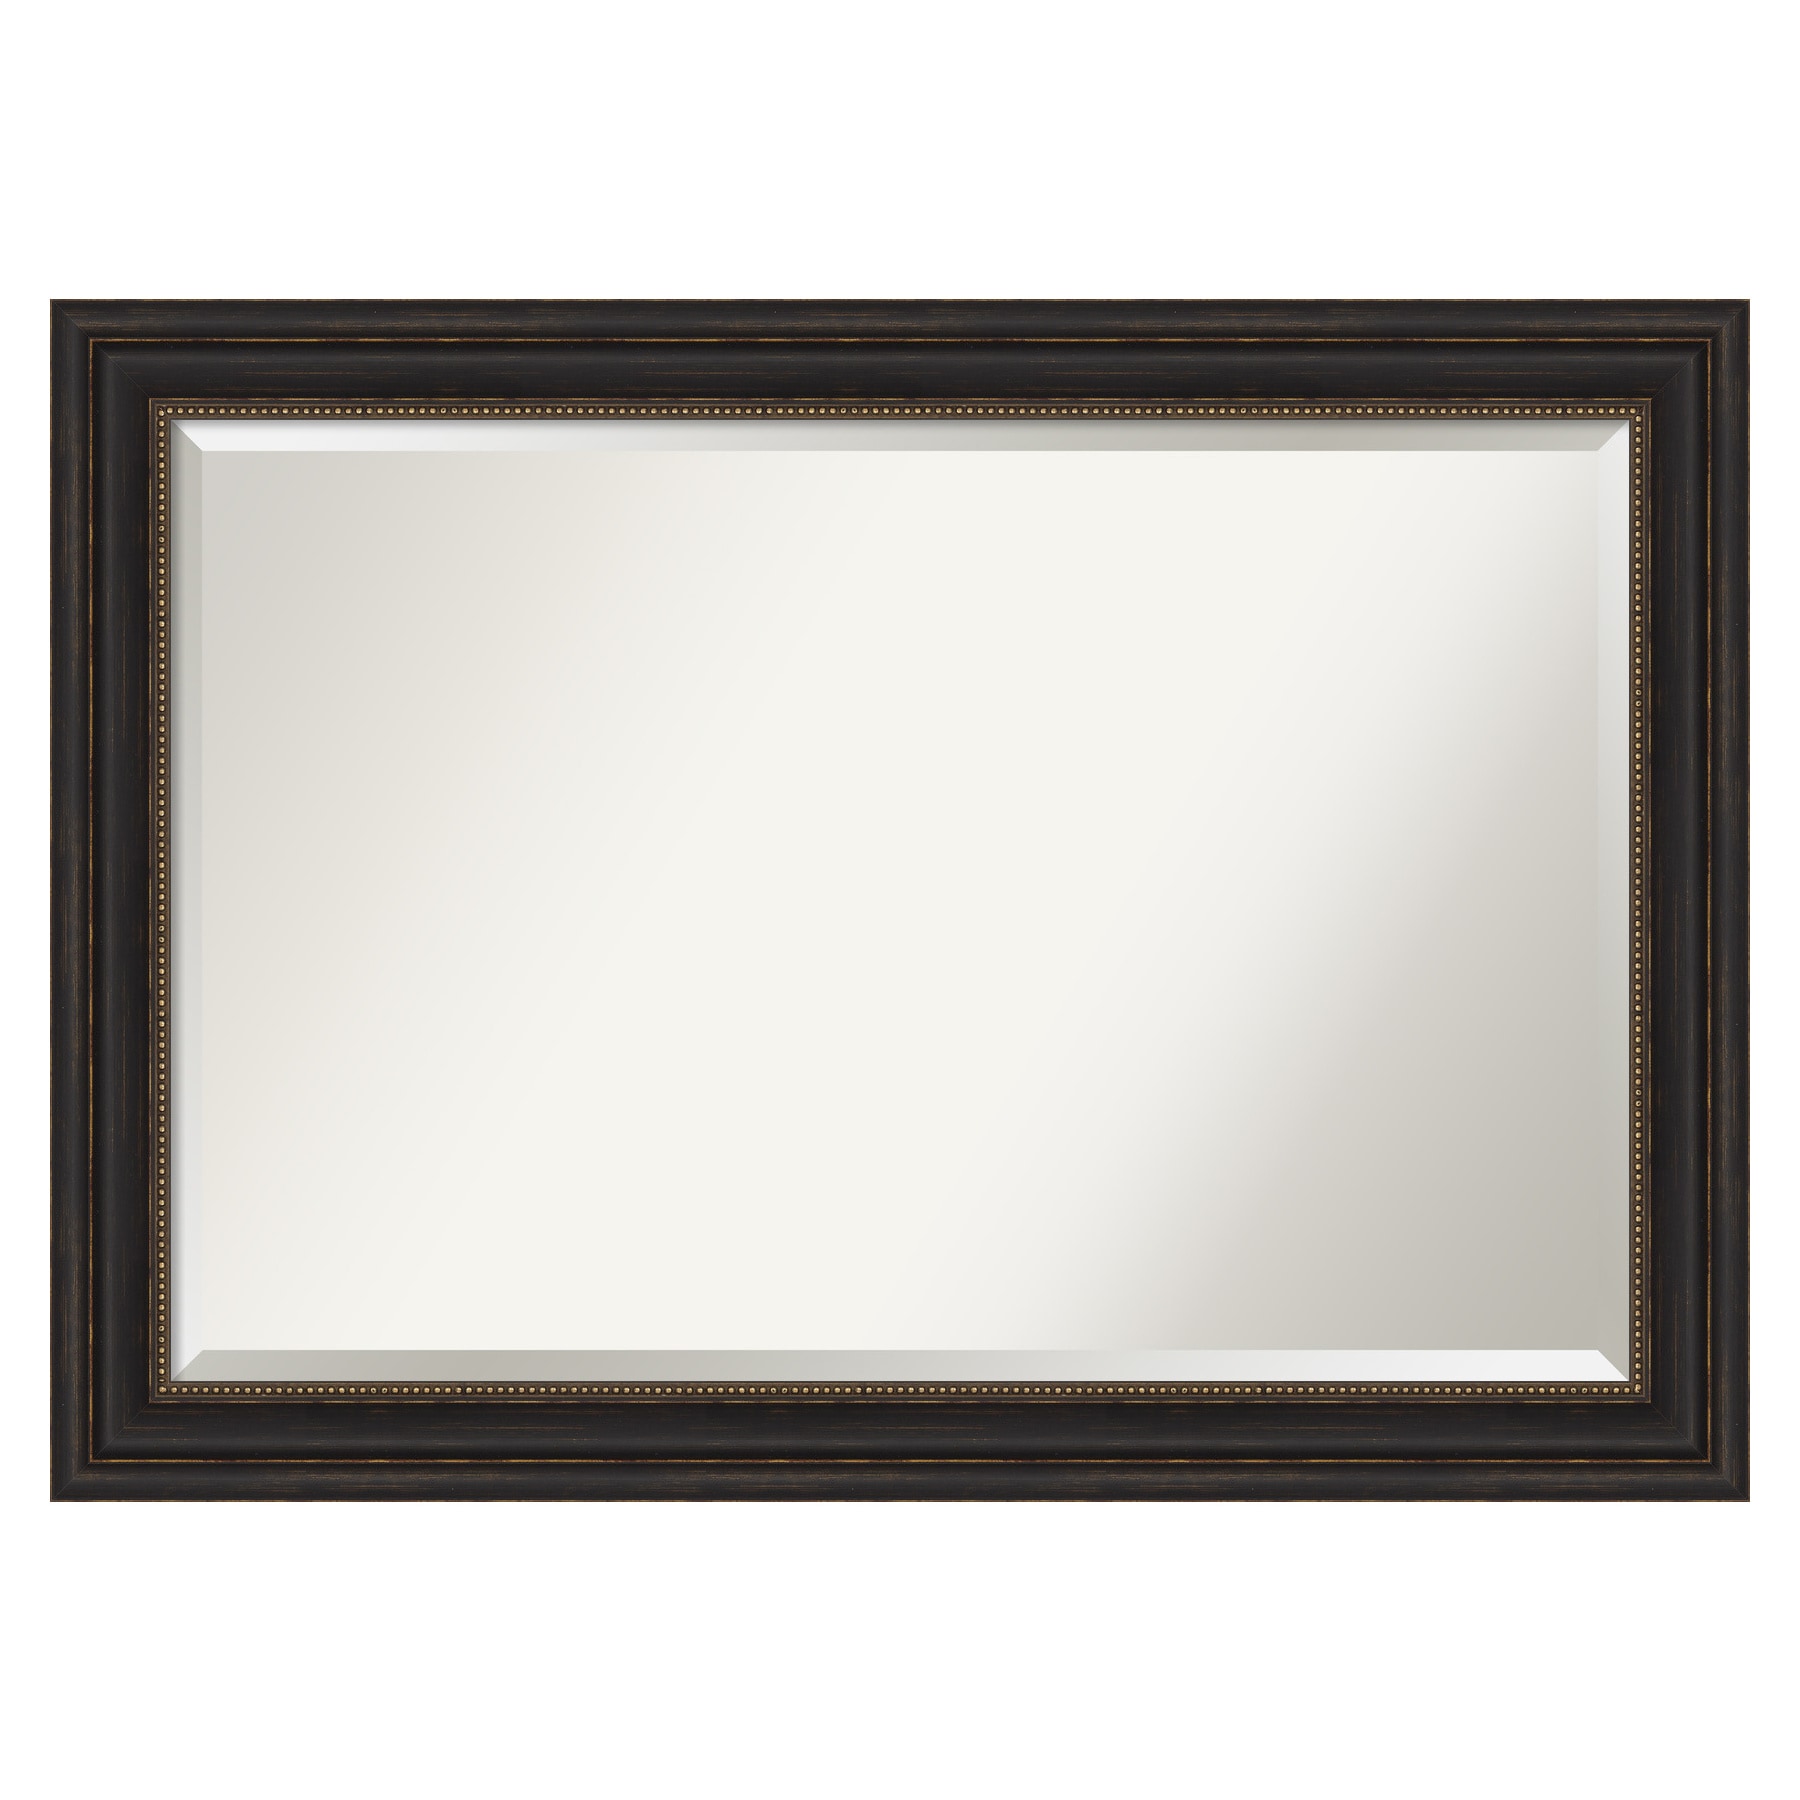 Amanti Art Accent Bronze Frame 41-in W x 29-in H Burnished Bronze Rectangular Bathroom Vanity Mirror